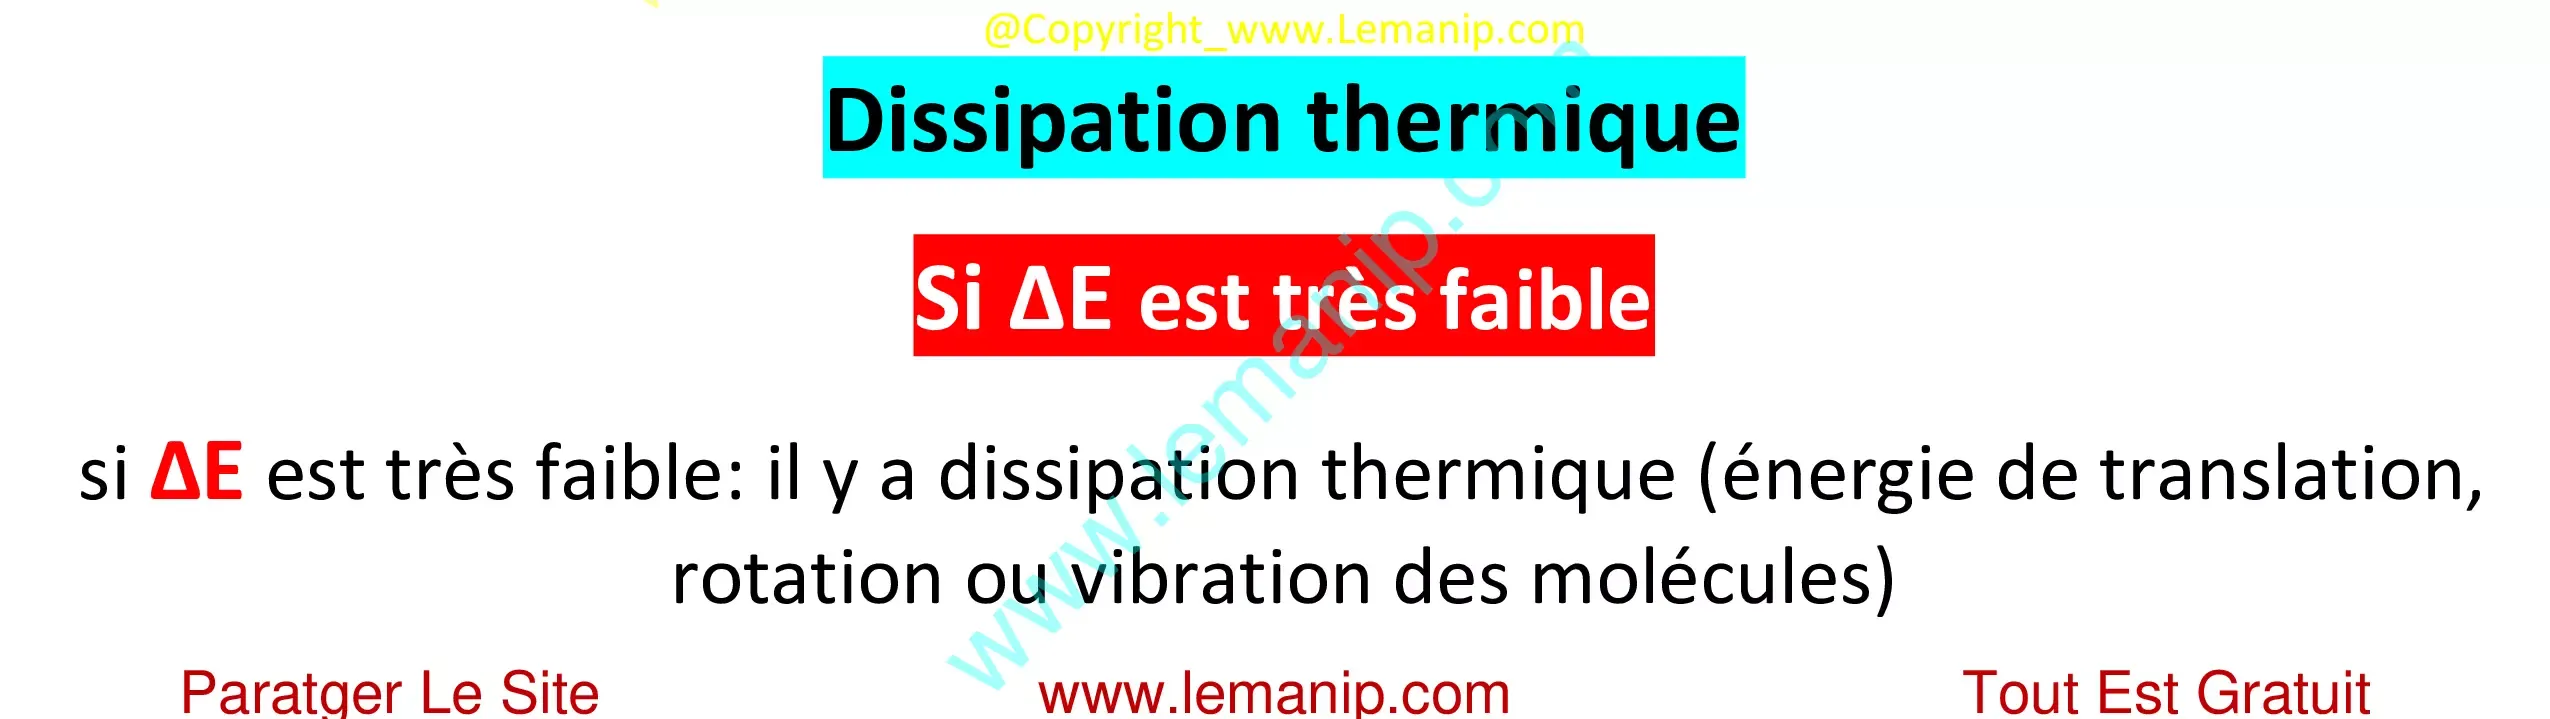 Dissipation thermique